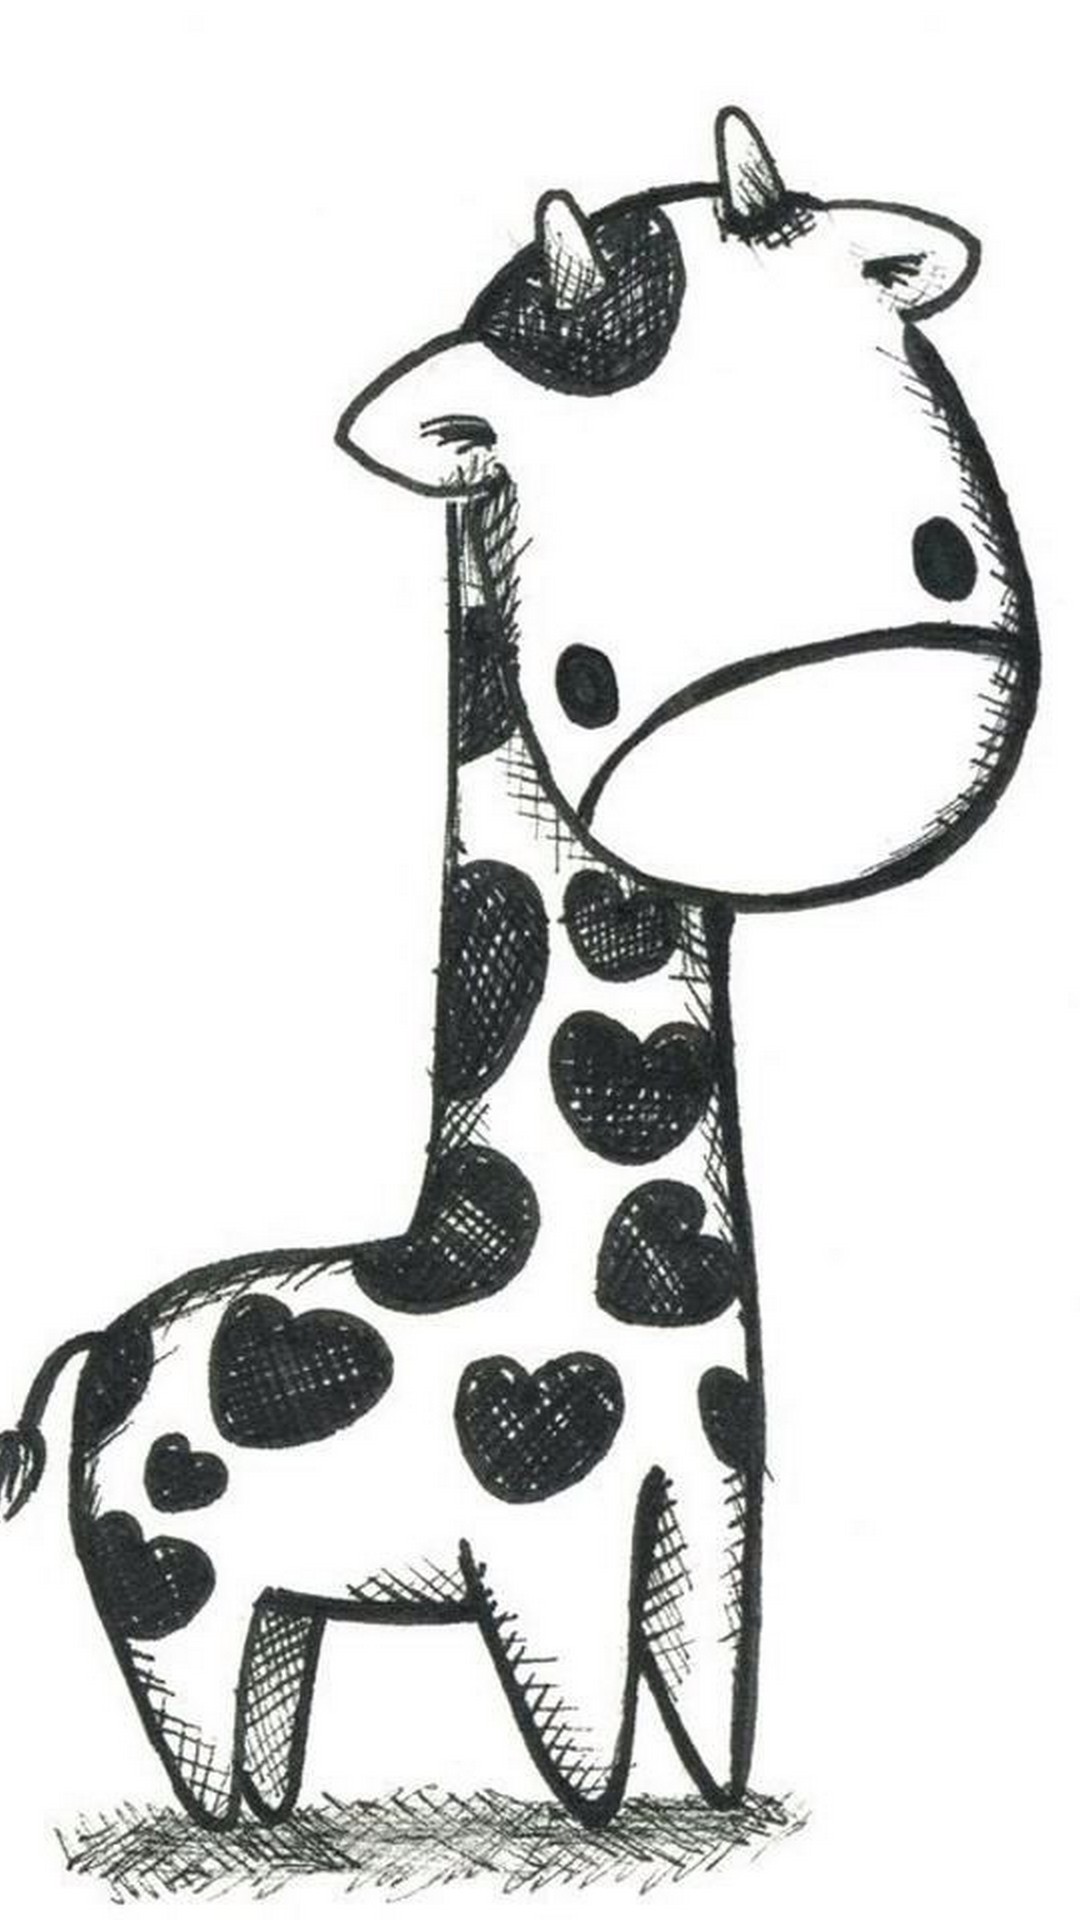 Giraffe Wallpaper Black and White resolution 1080x1920